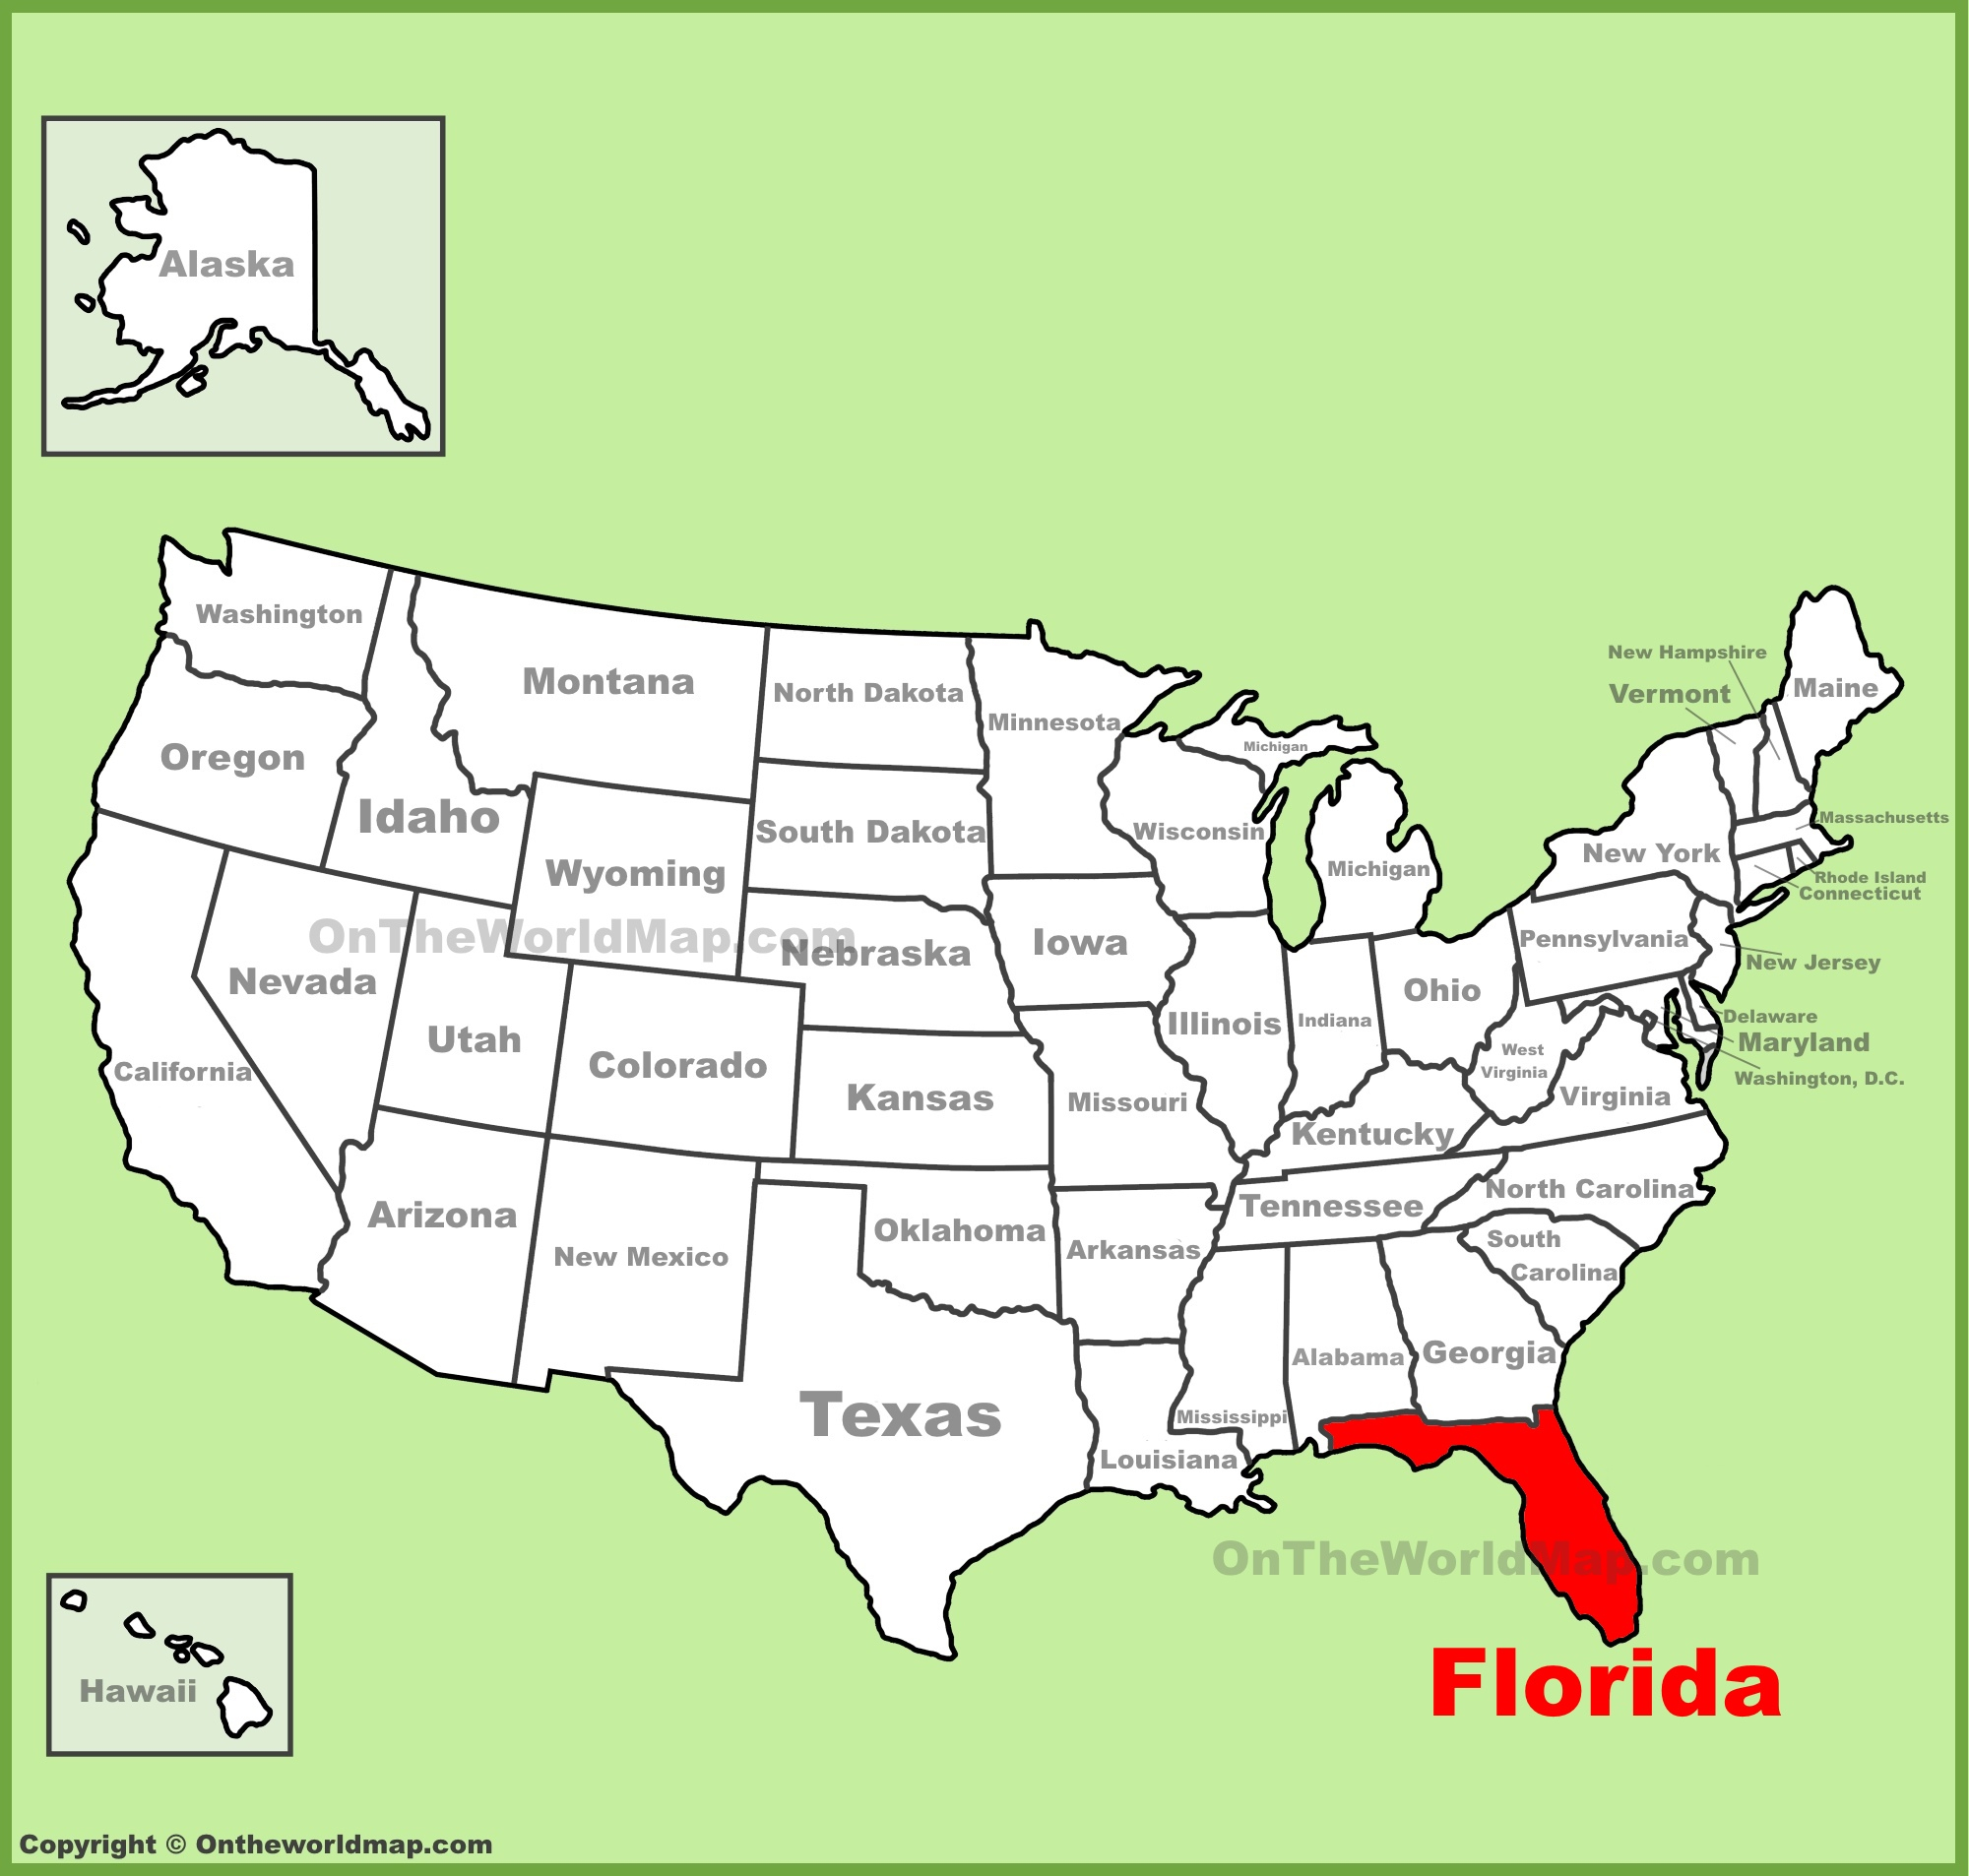 Florida State Maps | Usa | Maps Of Florida (Fl) - Sunrise Beach Florida Map